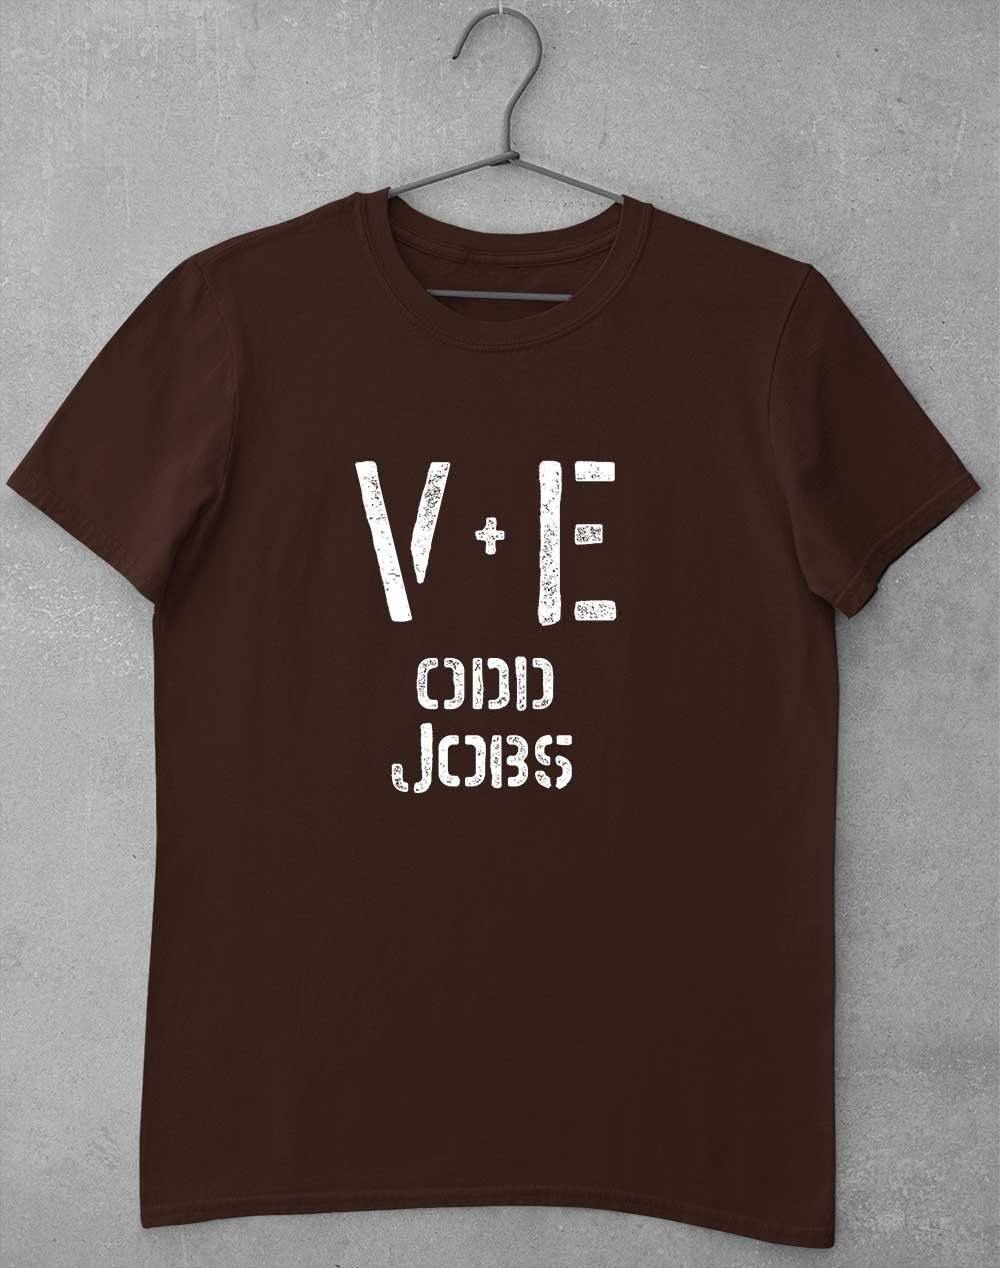 Val and Earl's Odd Jobs T-Shirt S / Dark Chocolate  - Off World Tees